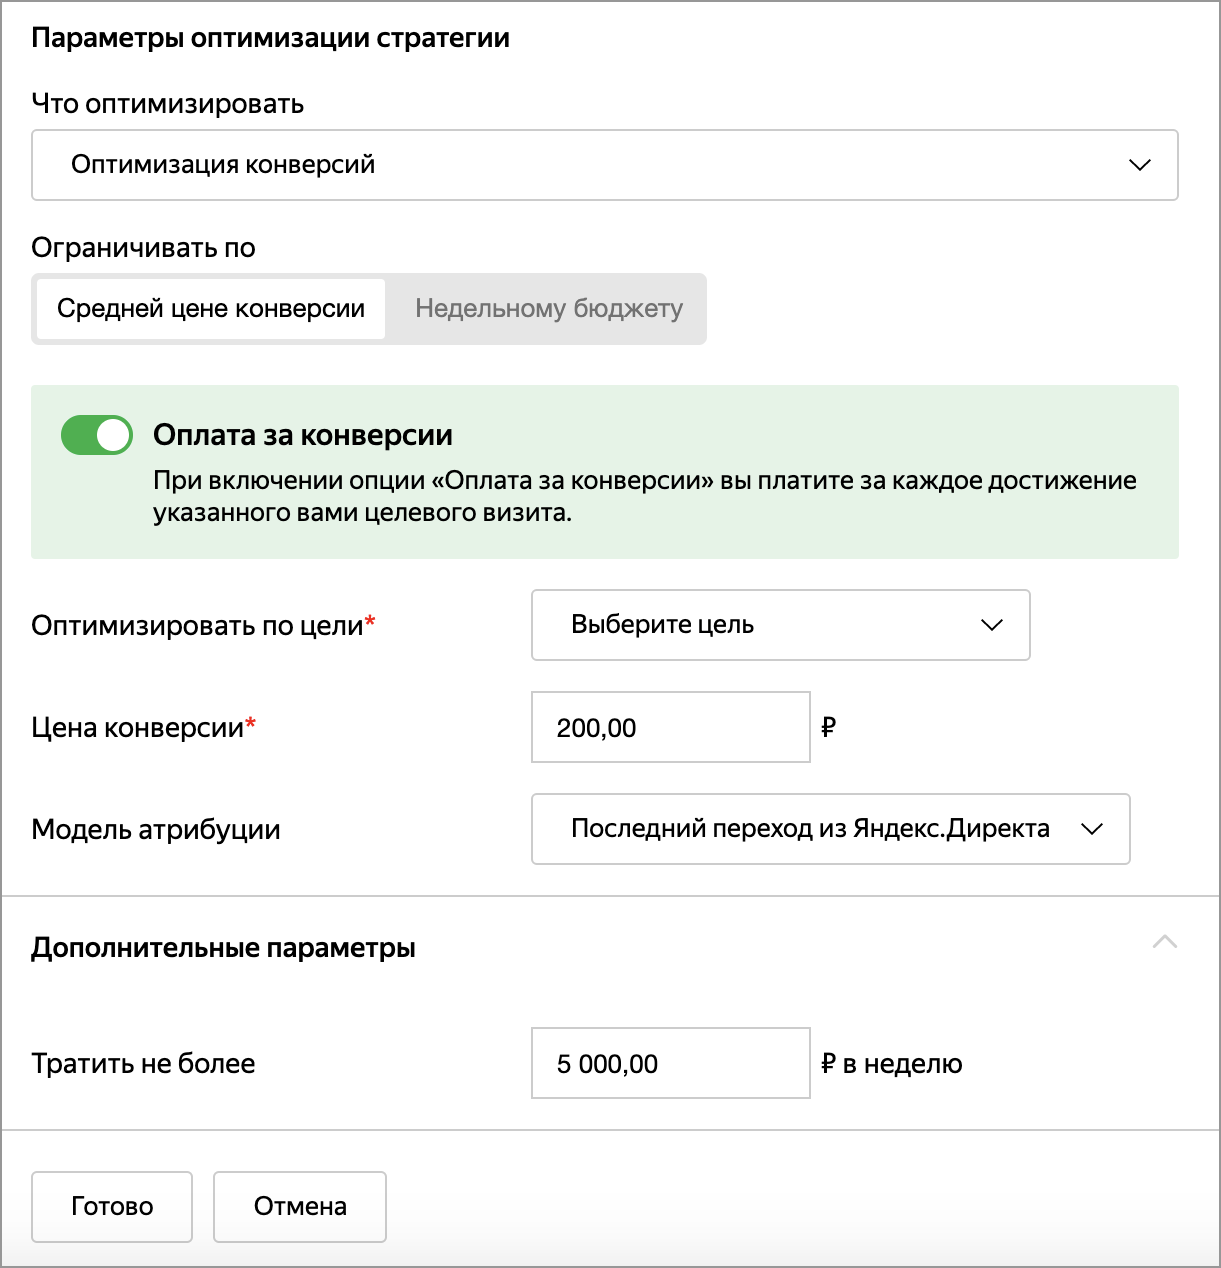 Плата за конверсии в Яндекс.Директе